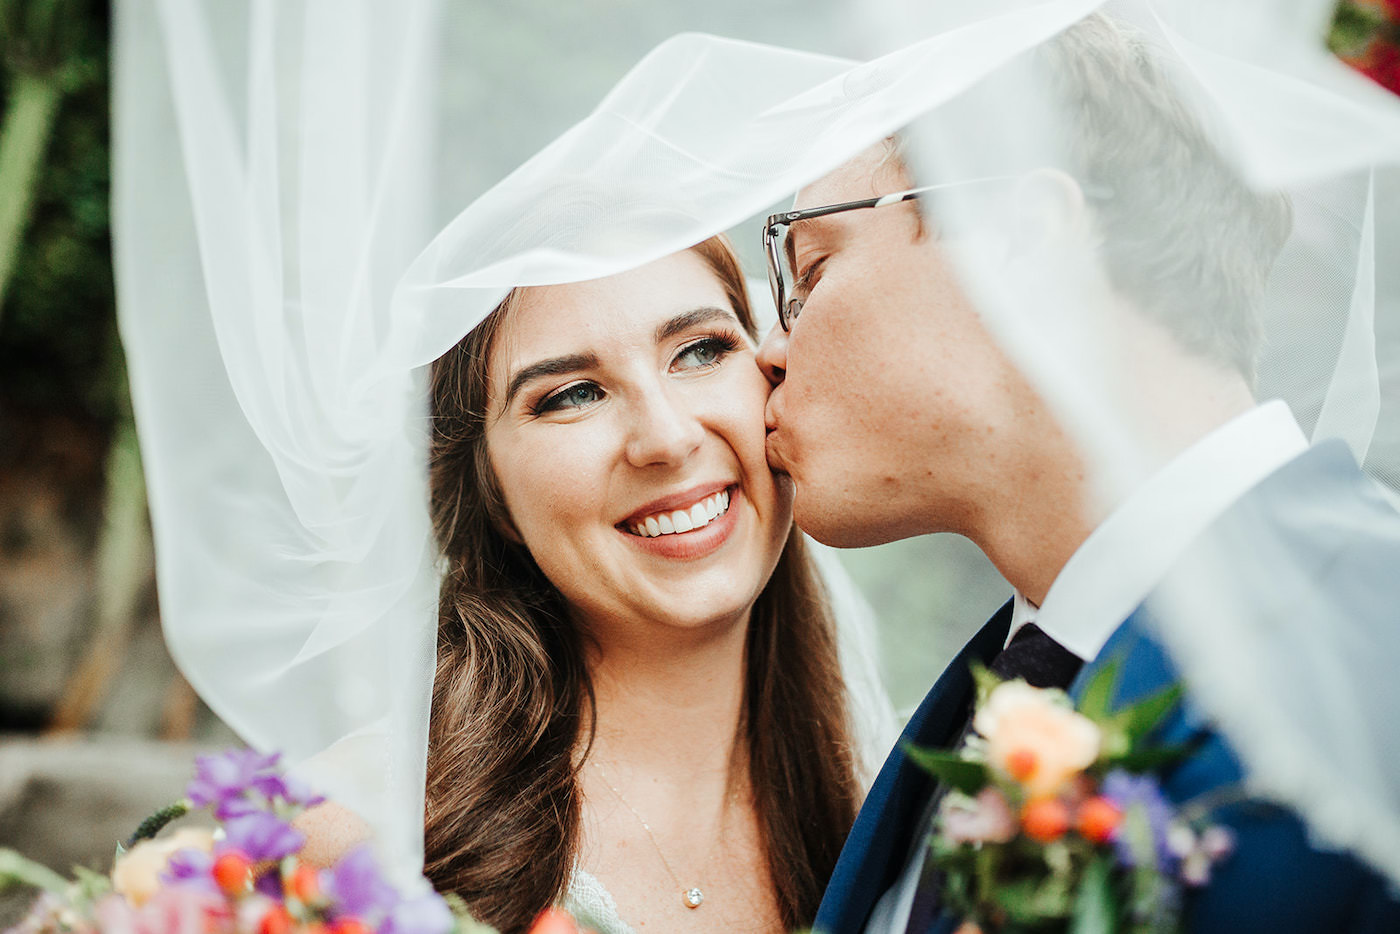 Romantic Groom Kissing Bride on Cheek with Bridal Veil Blowing in Wind Creative Wedding Portrait